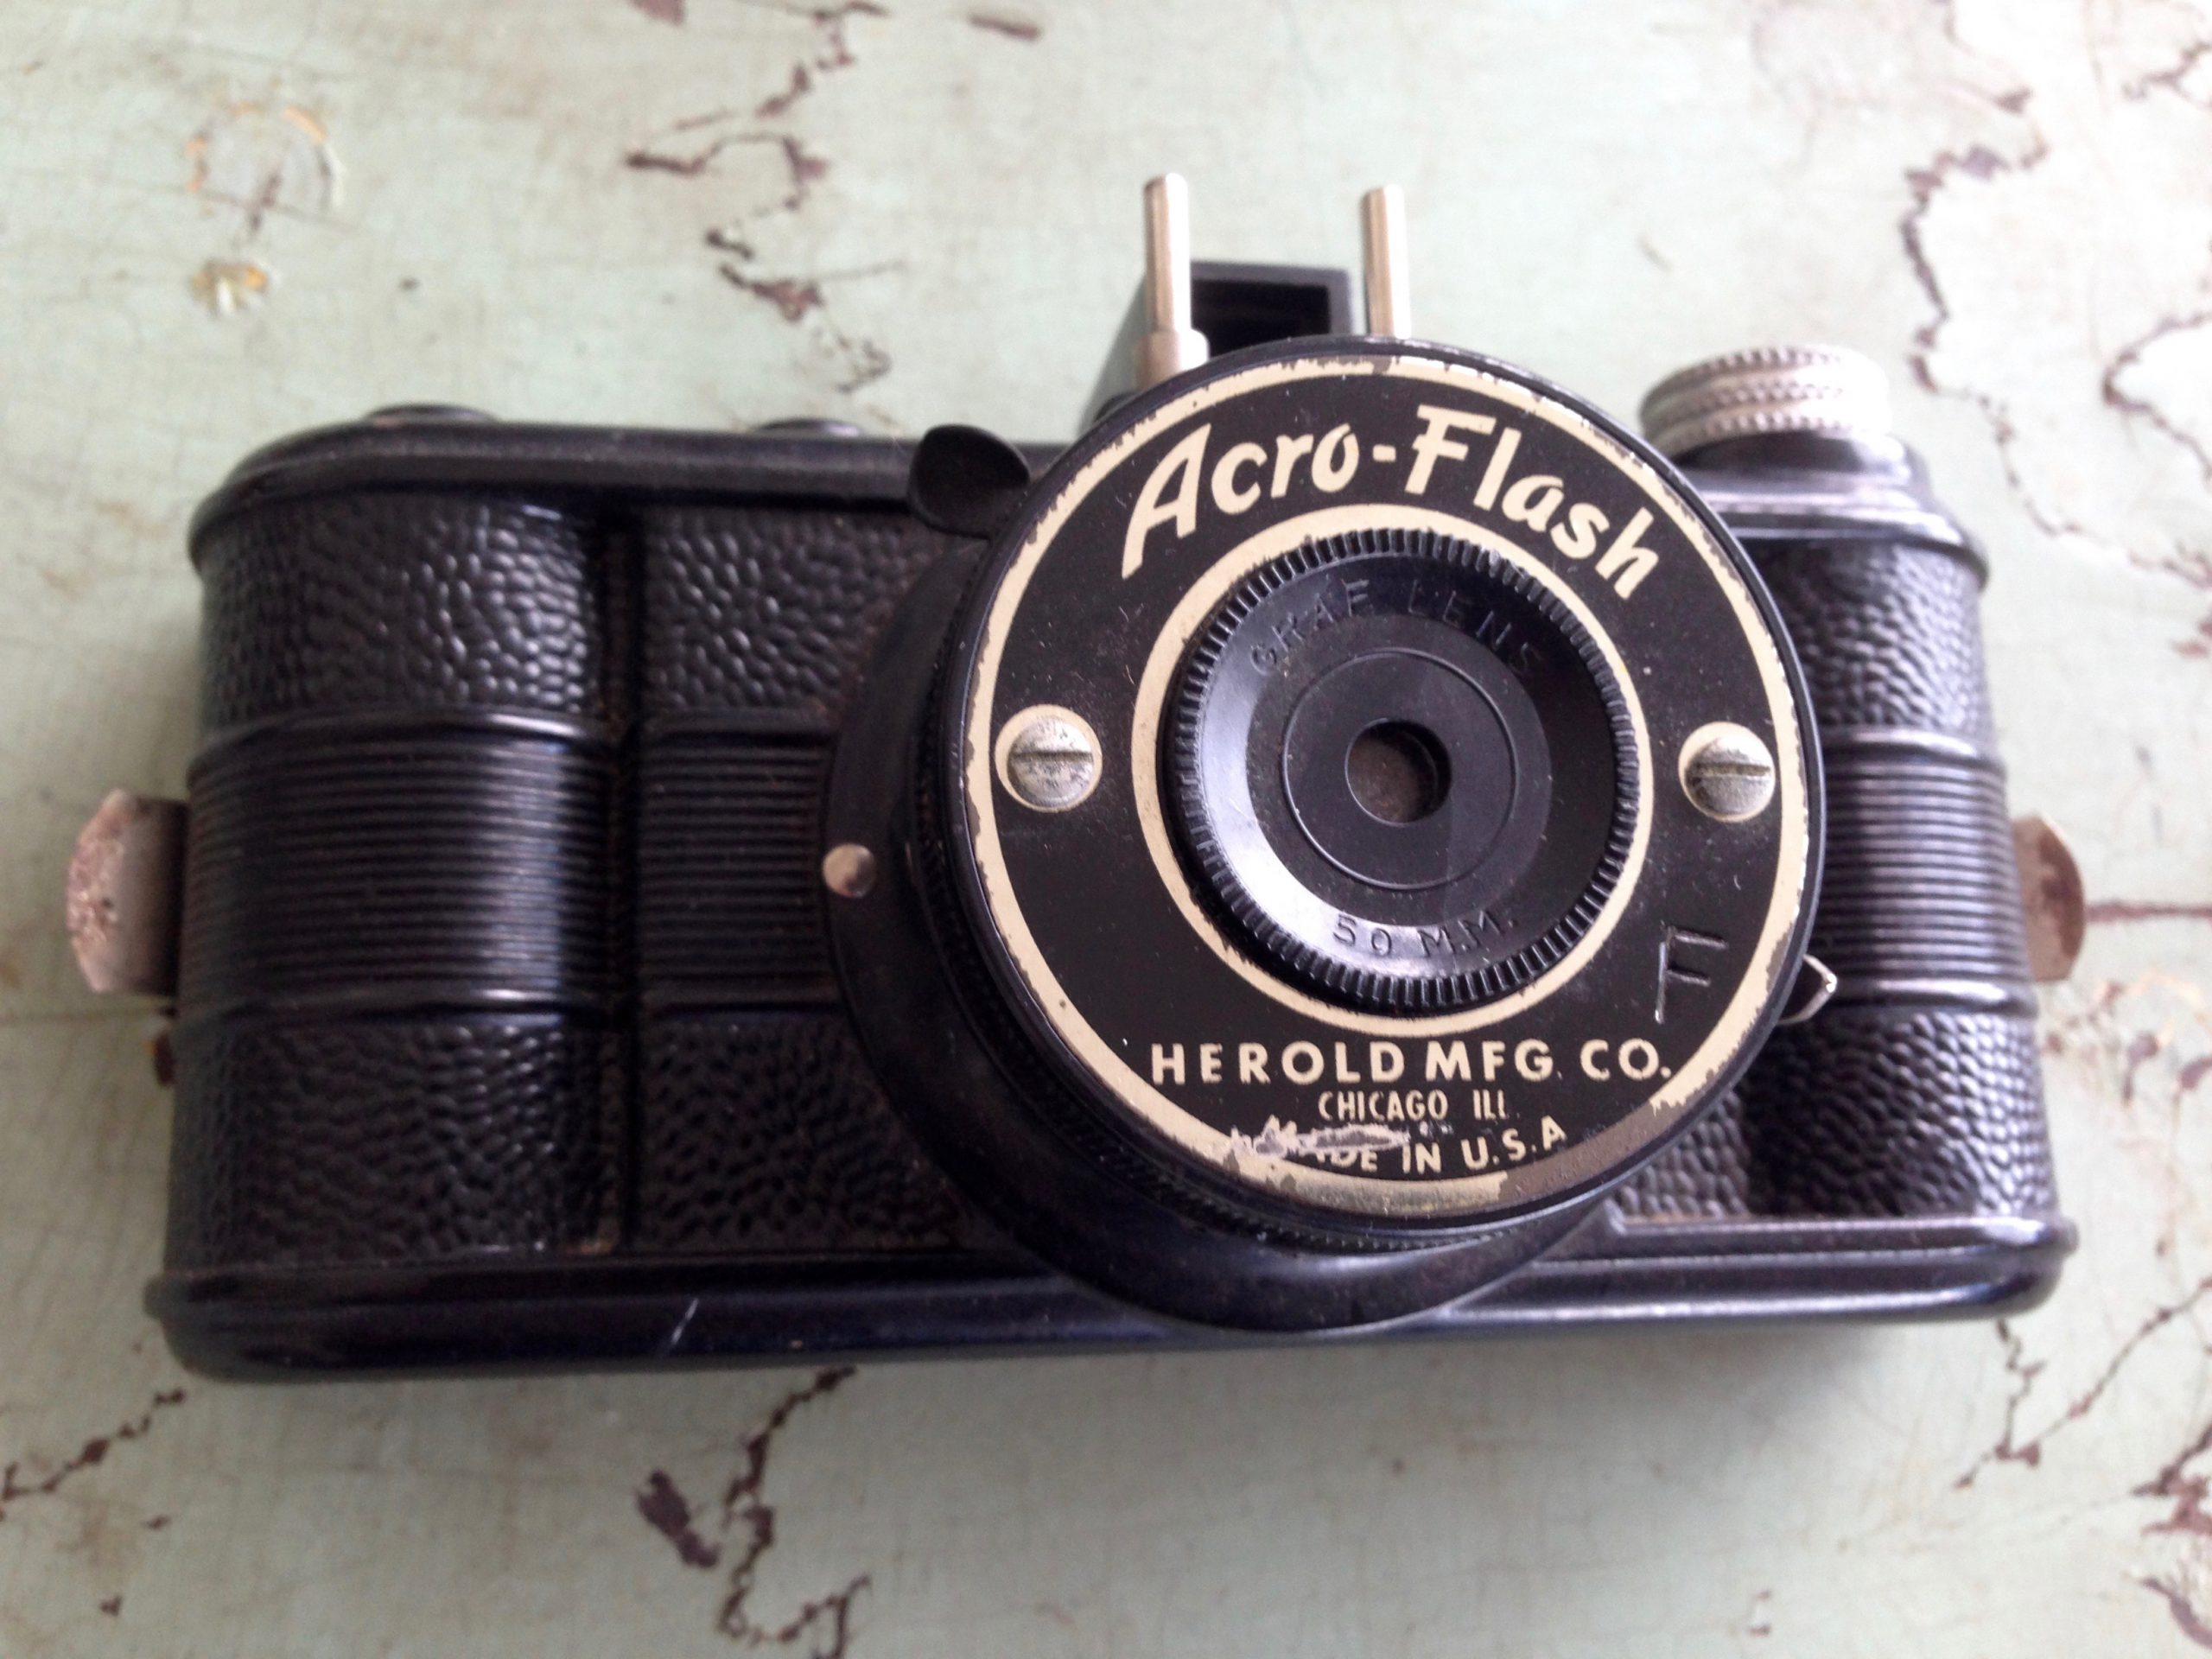 Acro-Flash Miniature Bakelite Camera by Herold MFG Co., 1950s